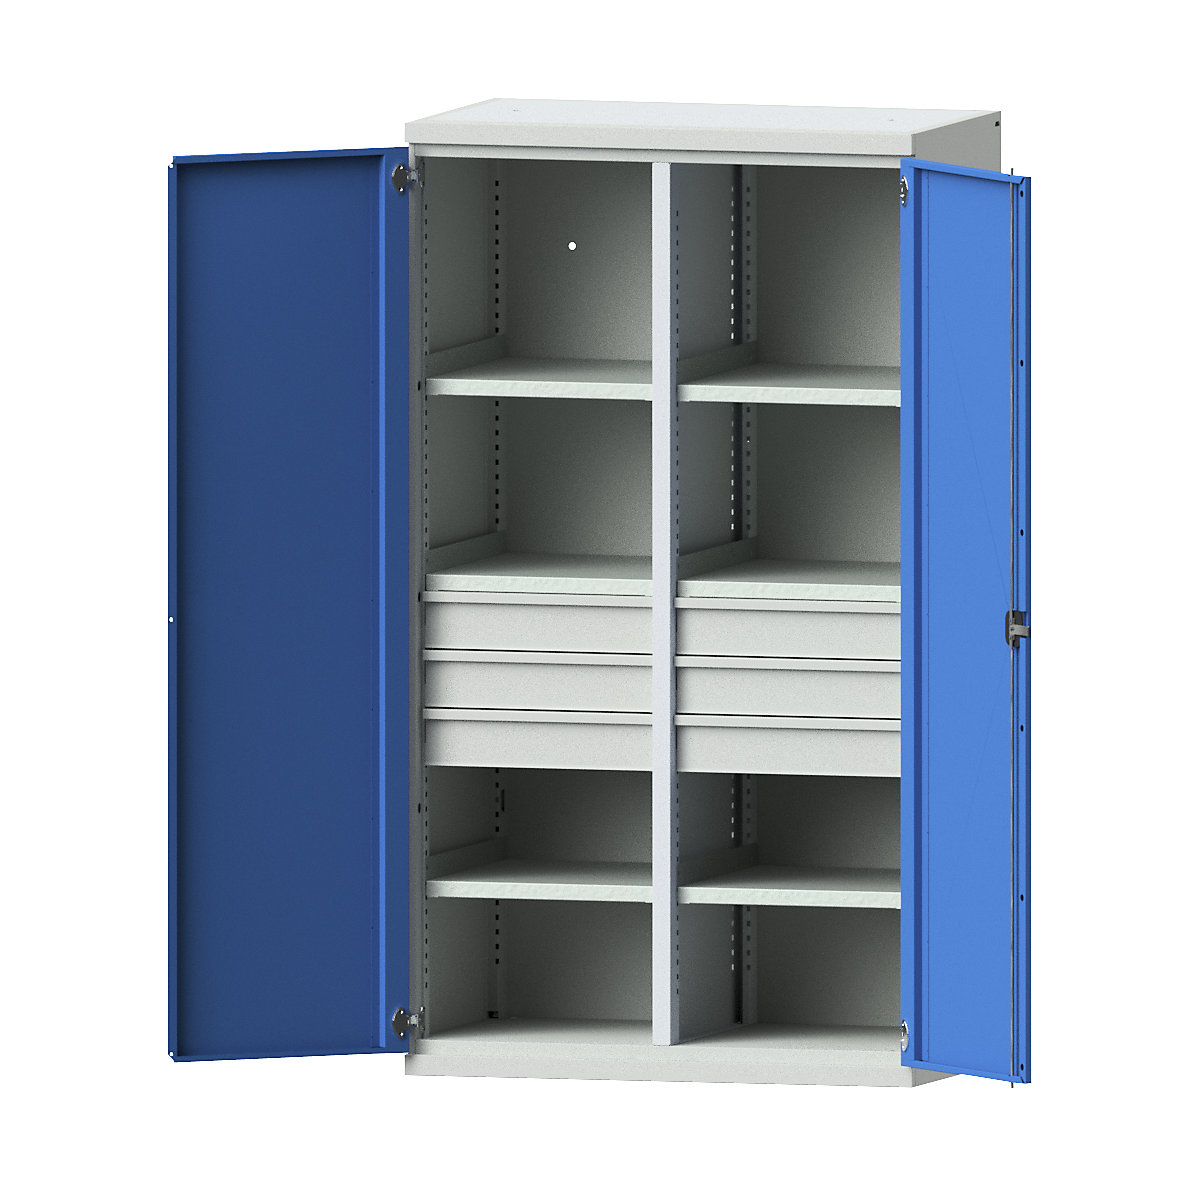 Heavy duty cupboard made of steel – eurokraft pro, 6 shelves, 6 x 120 mm high drawers, light grey / light blue-10